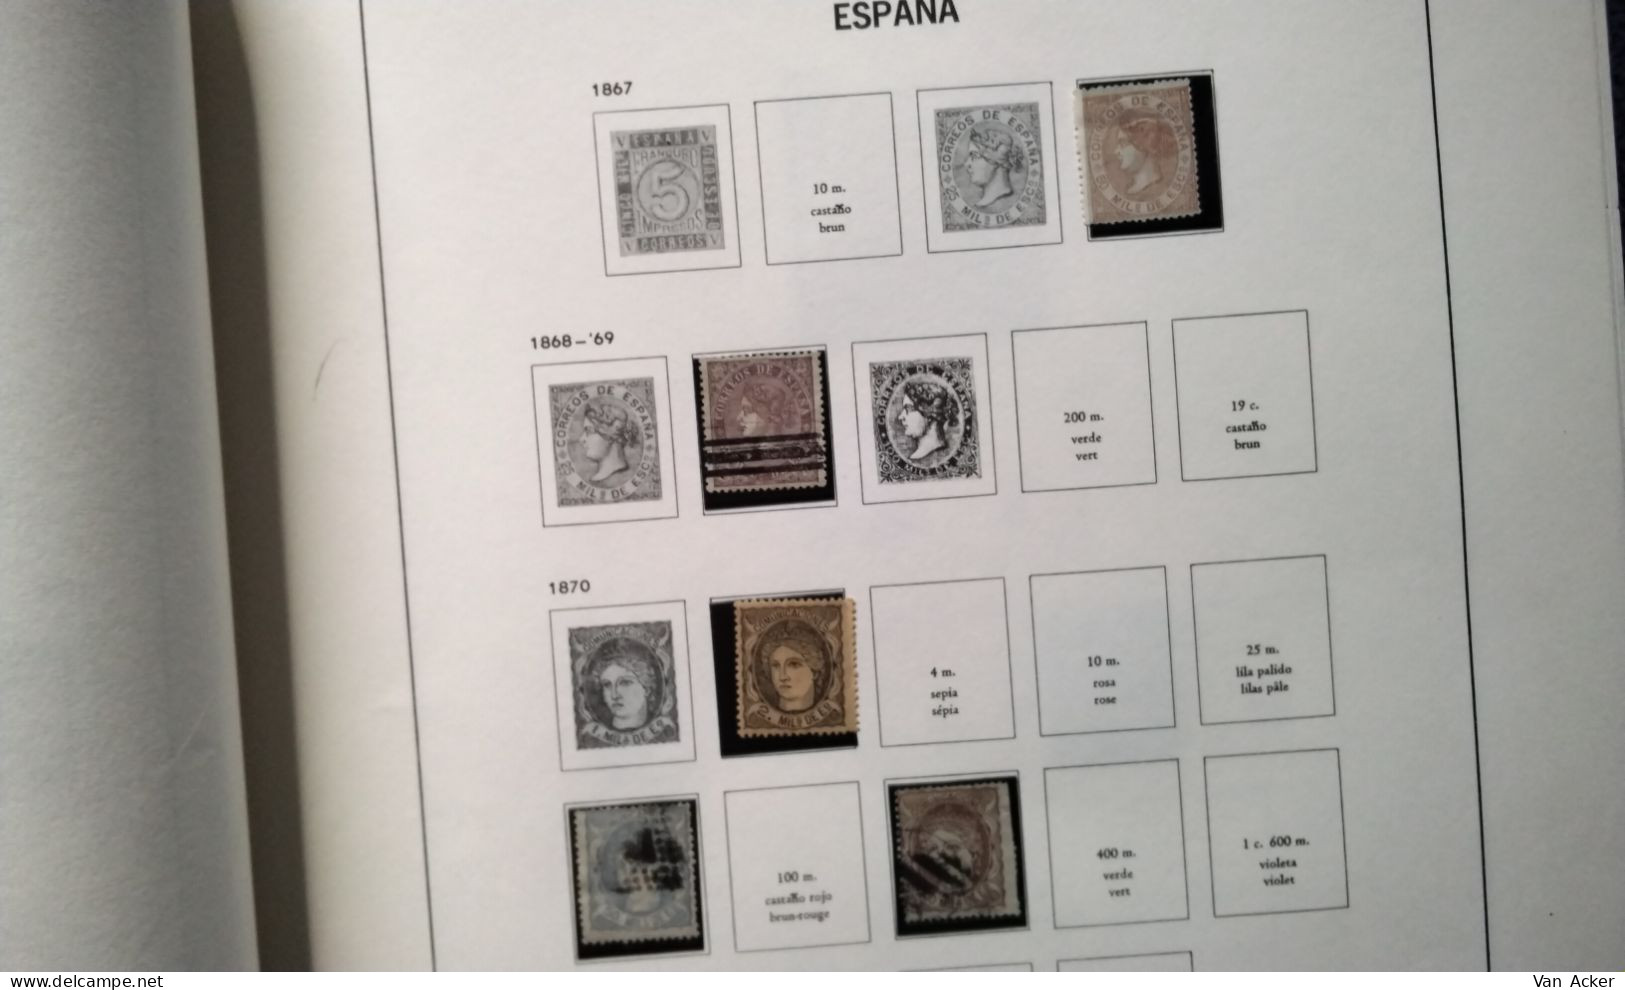 Album Spain year 1851 till 1944 */used.